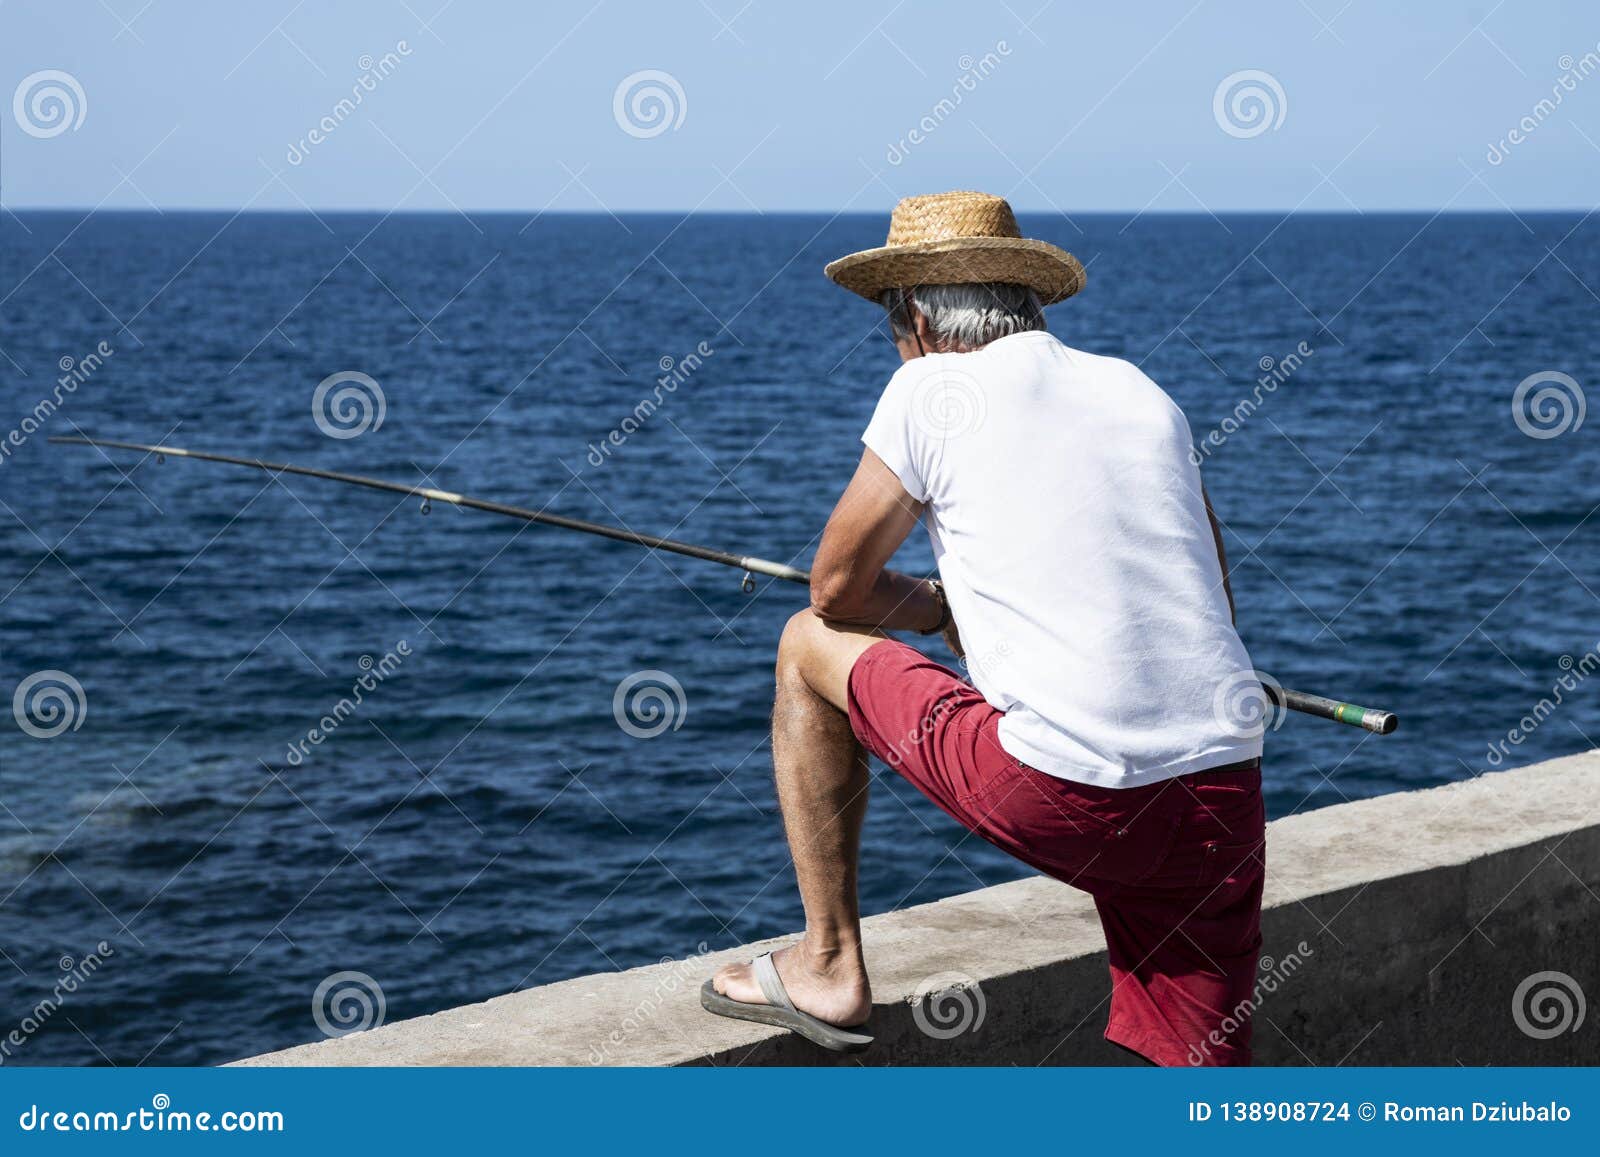 287 Fisherman Straw Hat Stock Photos - Free & Royalty-Free Stock